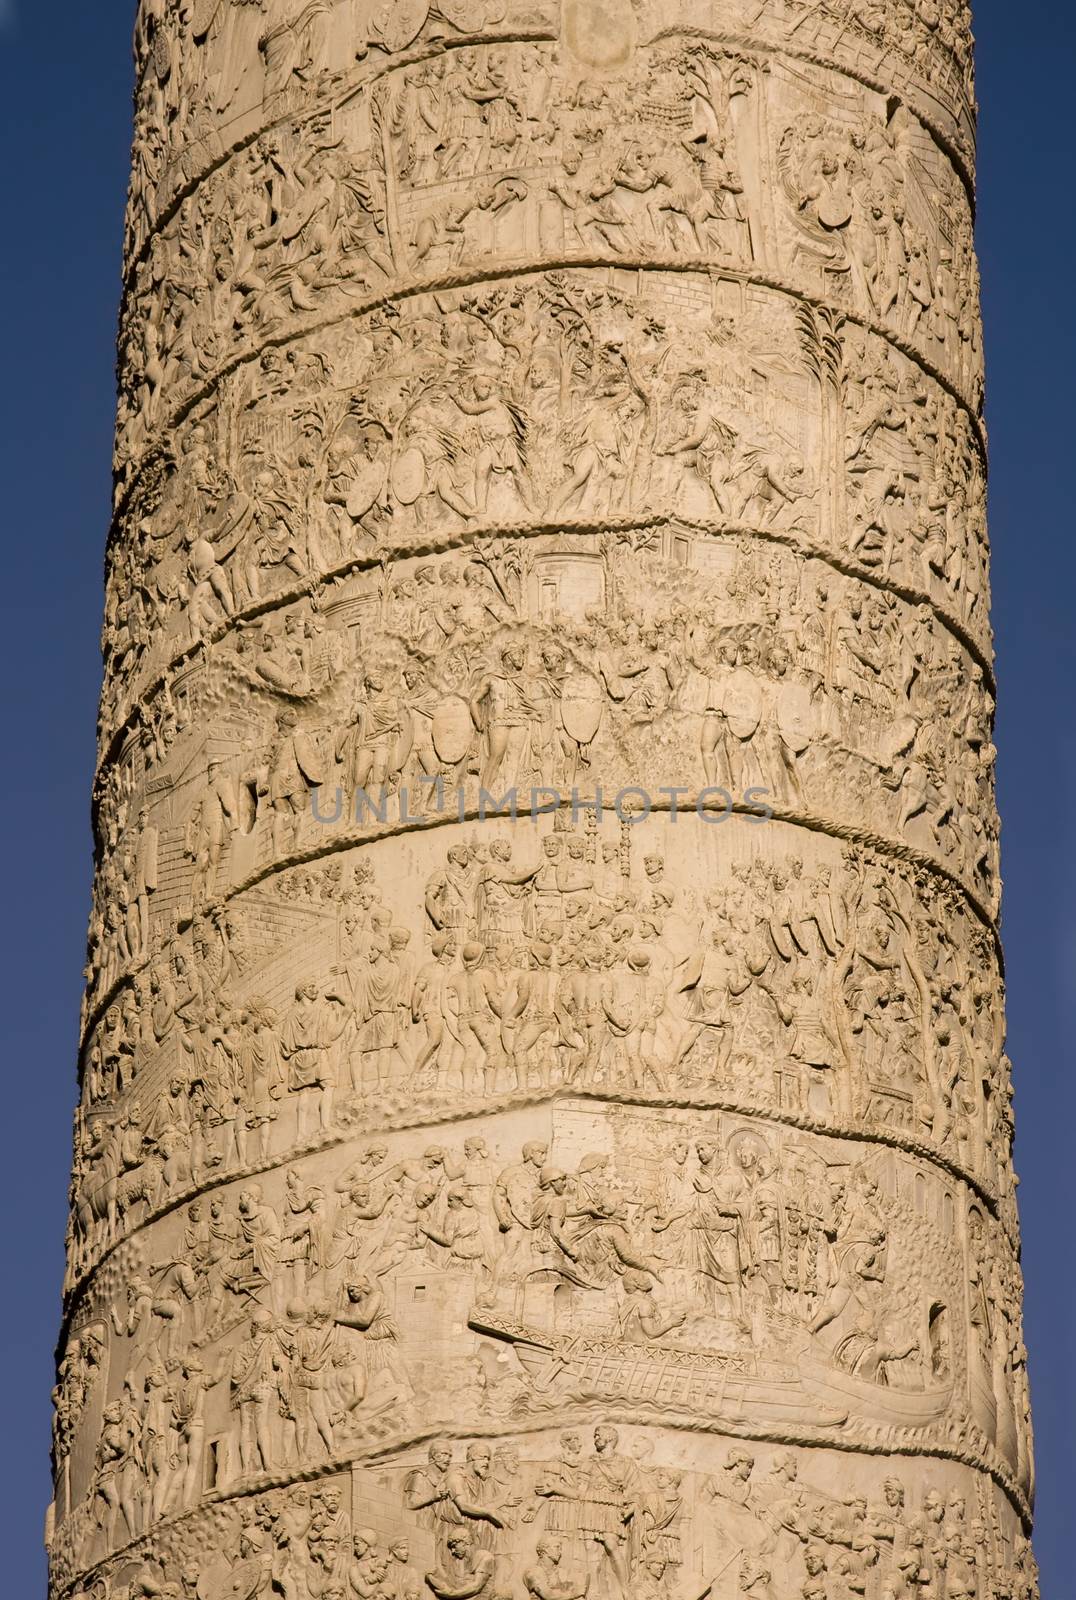 Trajan column or Colonna Traiana located in Trajan Forum in Rome, Italy